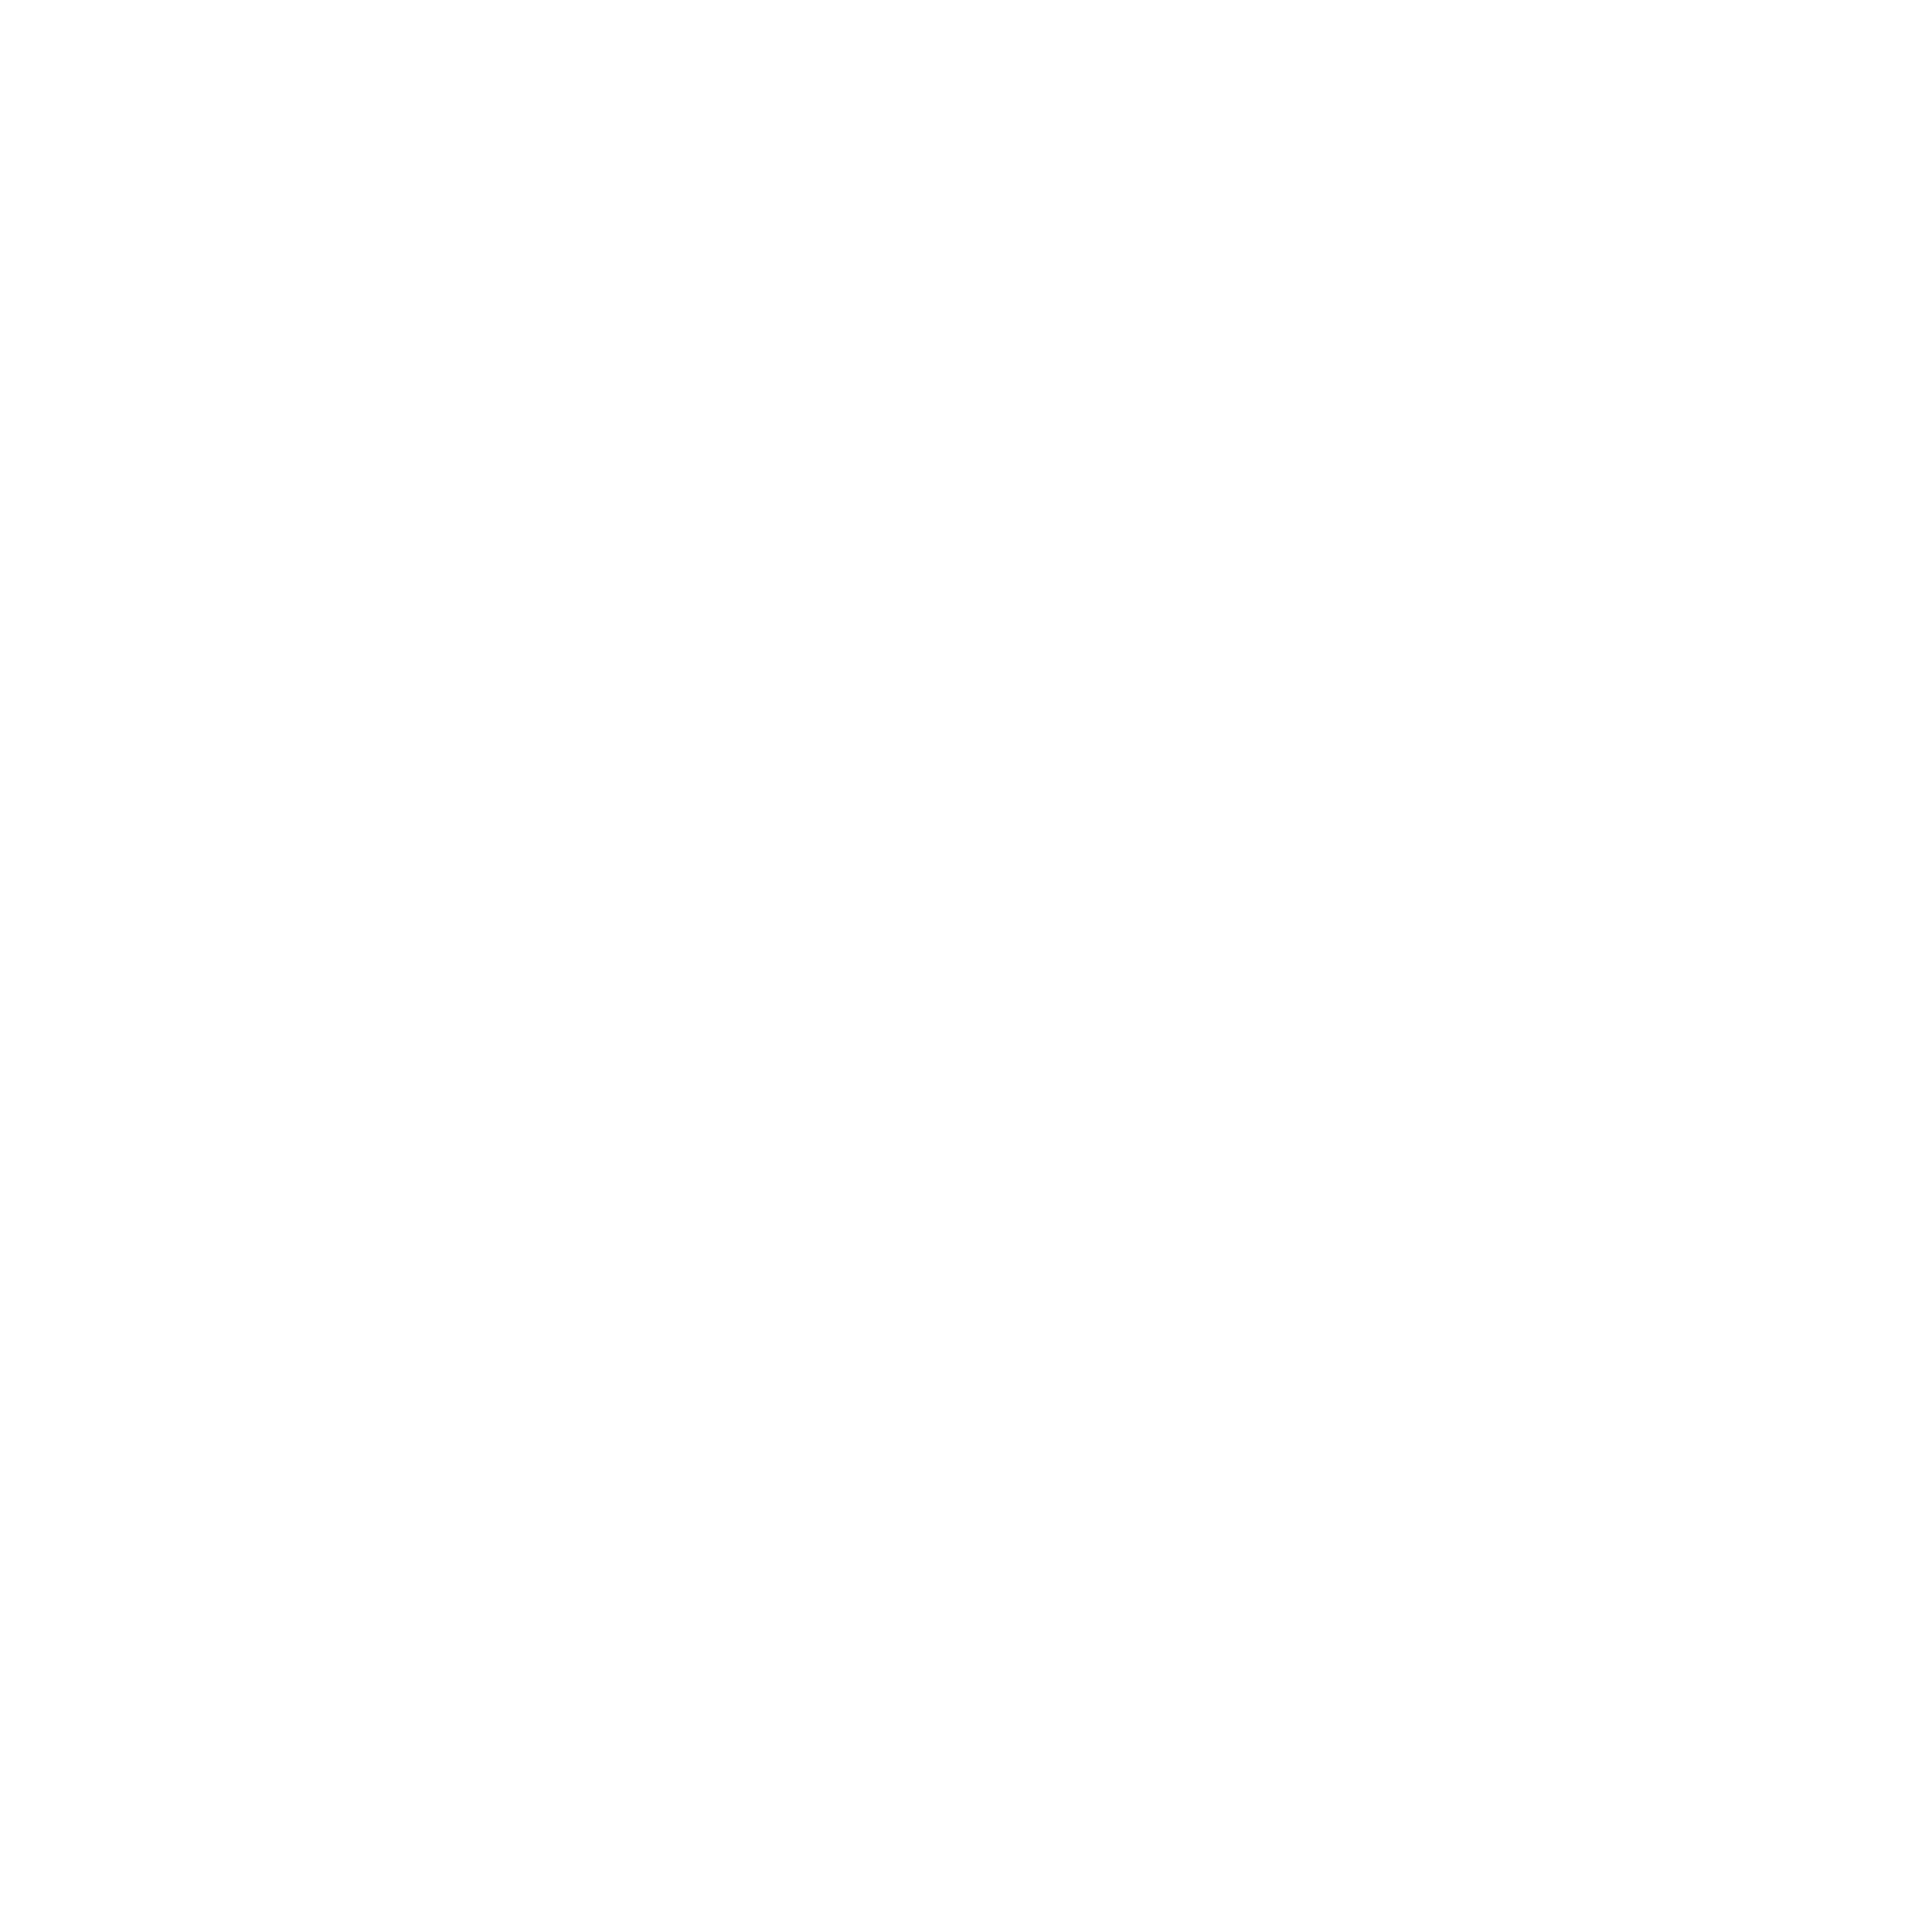 BIG Entertainment Videoproduction